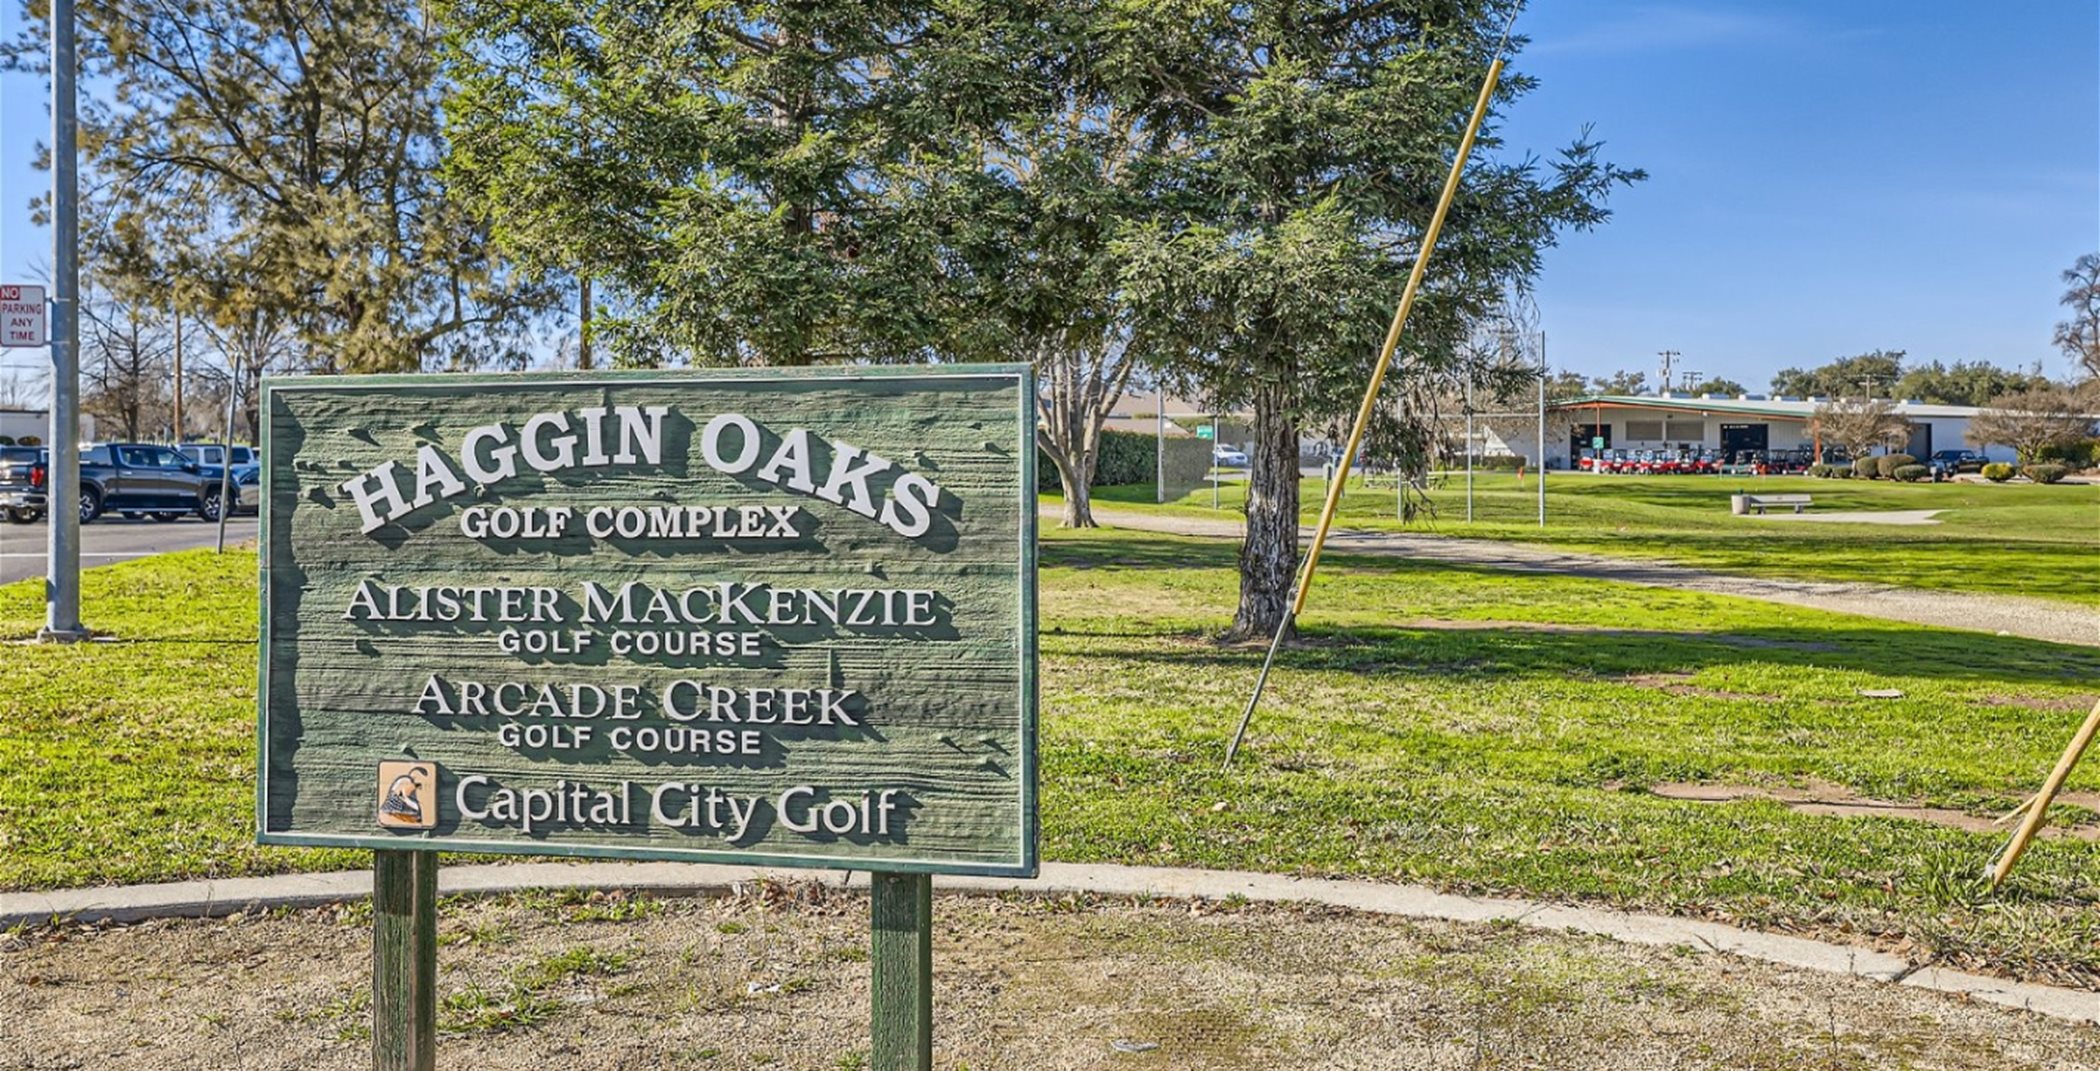 Higgin Oaks Golf complex entry sign